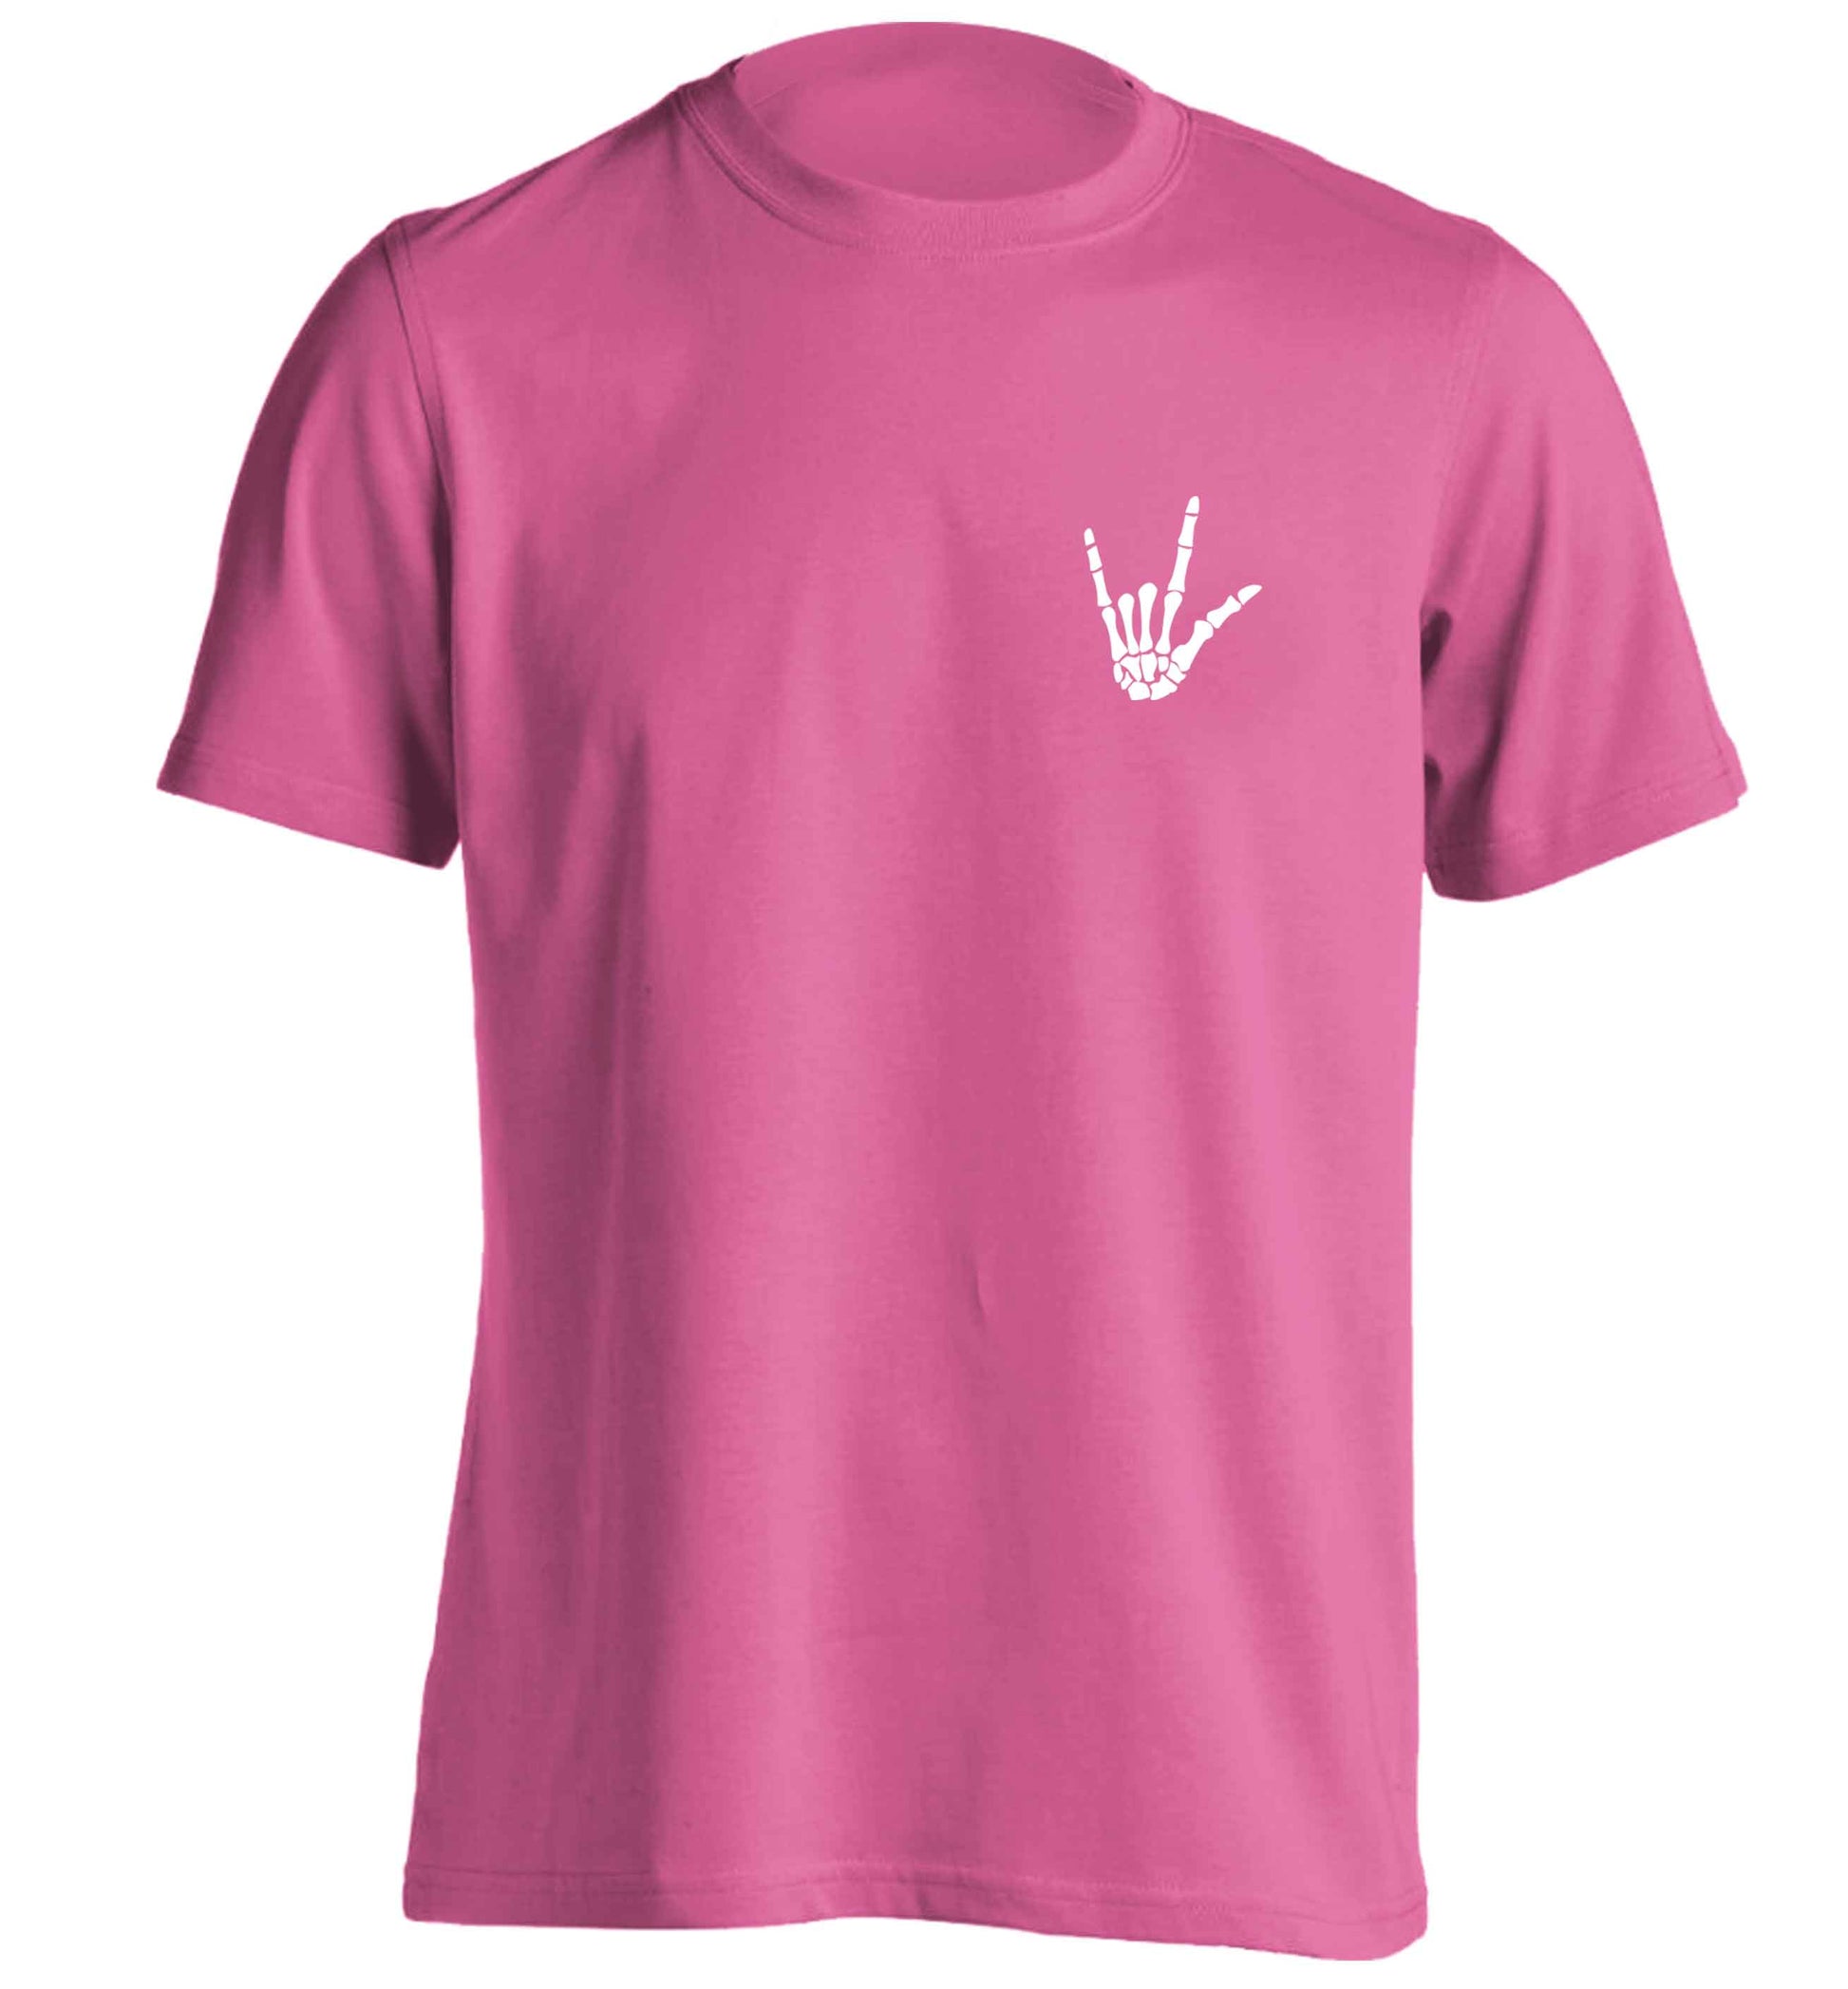 Skeleton Hand Pocket adults unisex pink Tshirt 2XL